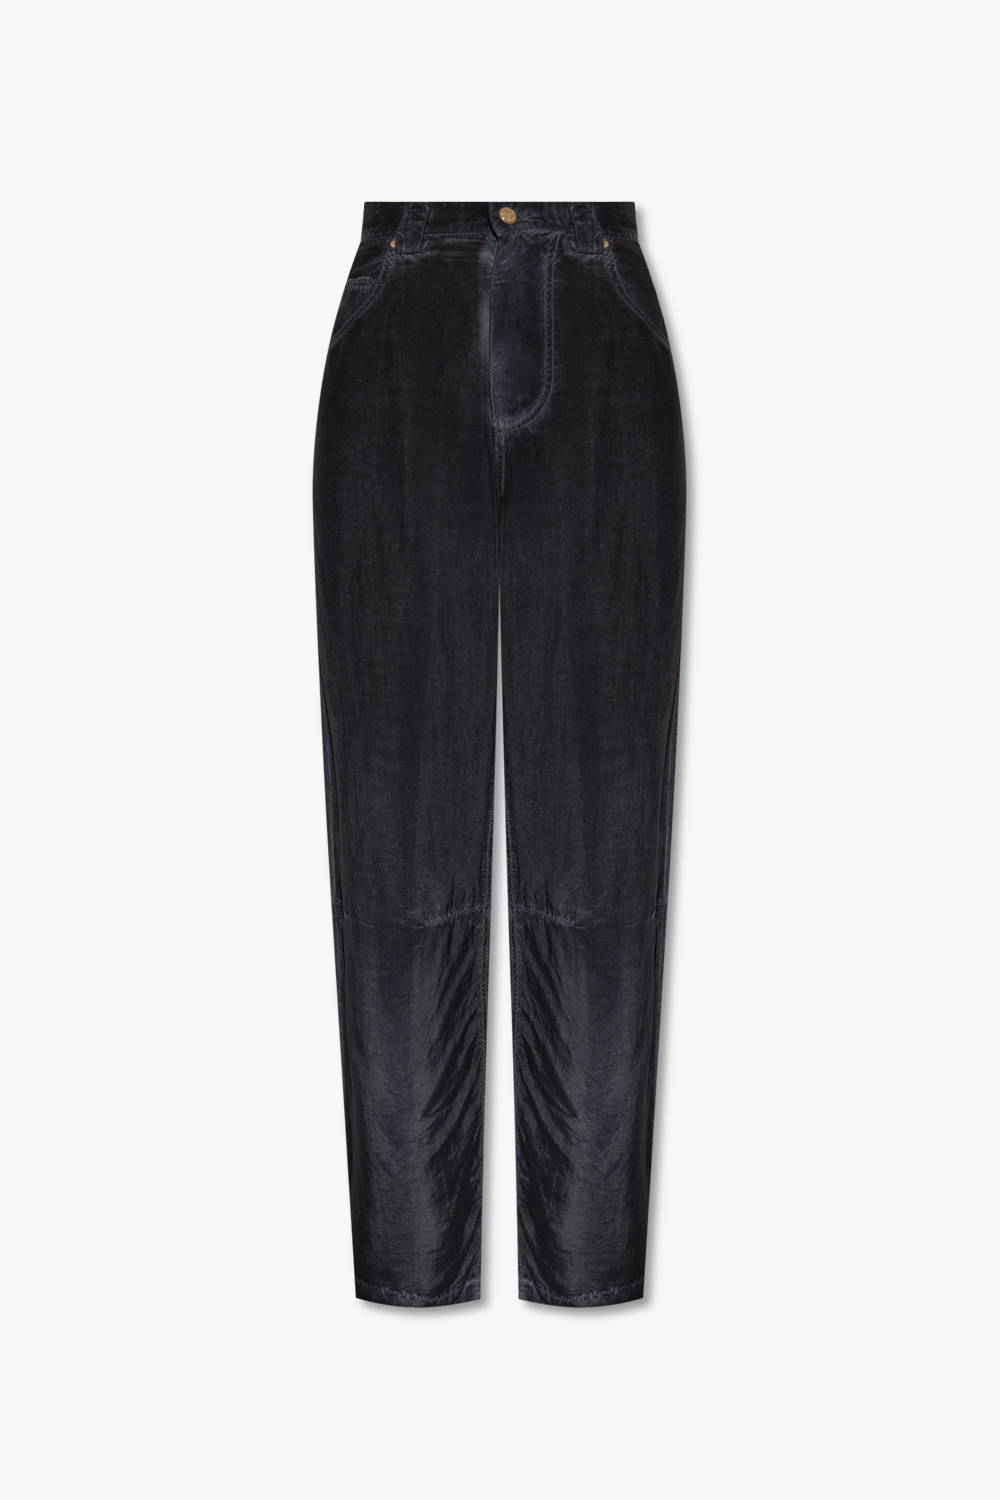 Sienna Stretch Velvet Trousers in DK GREY